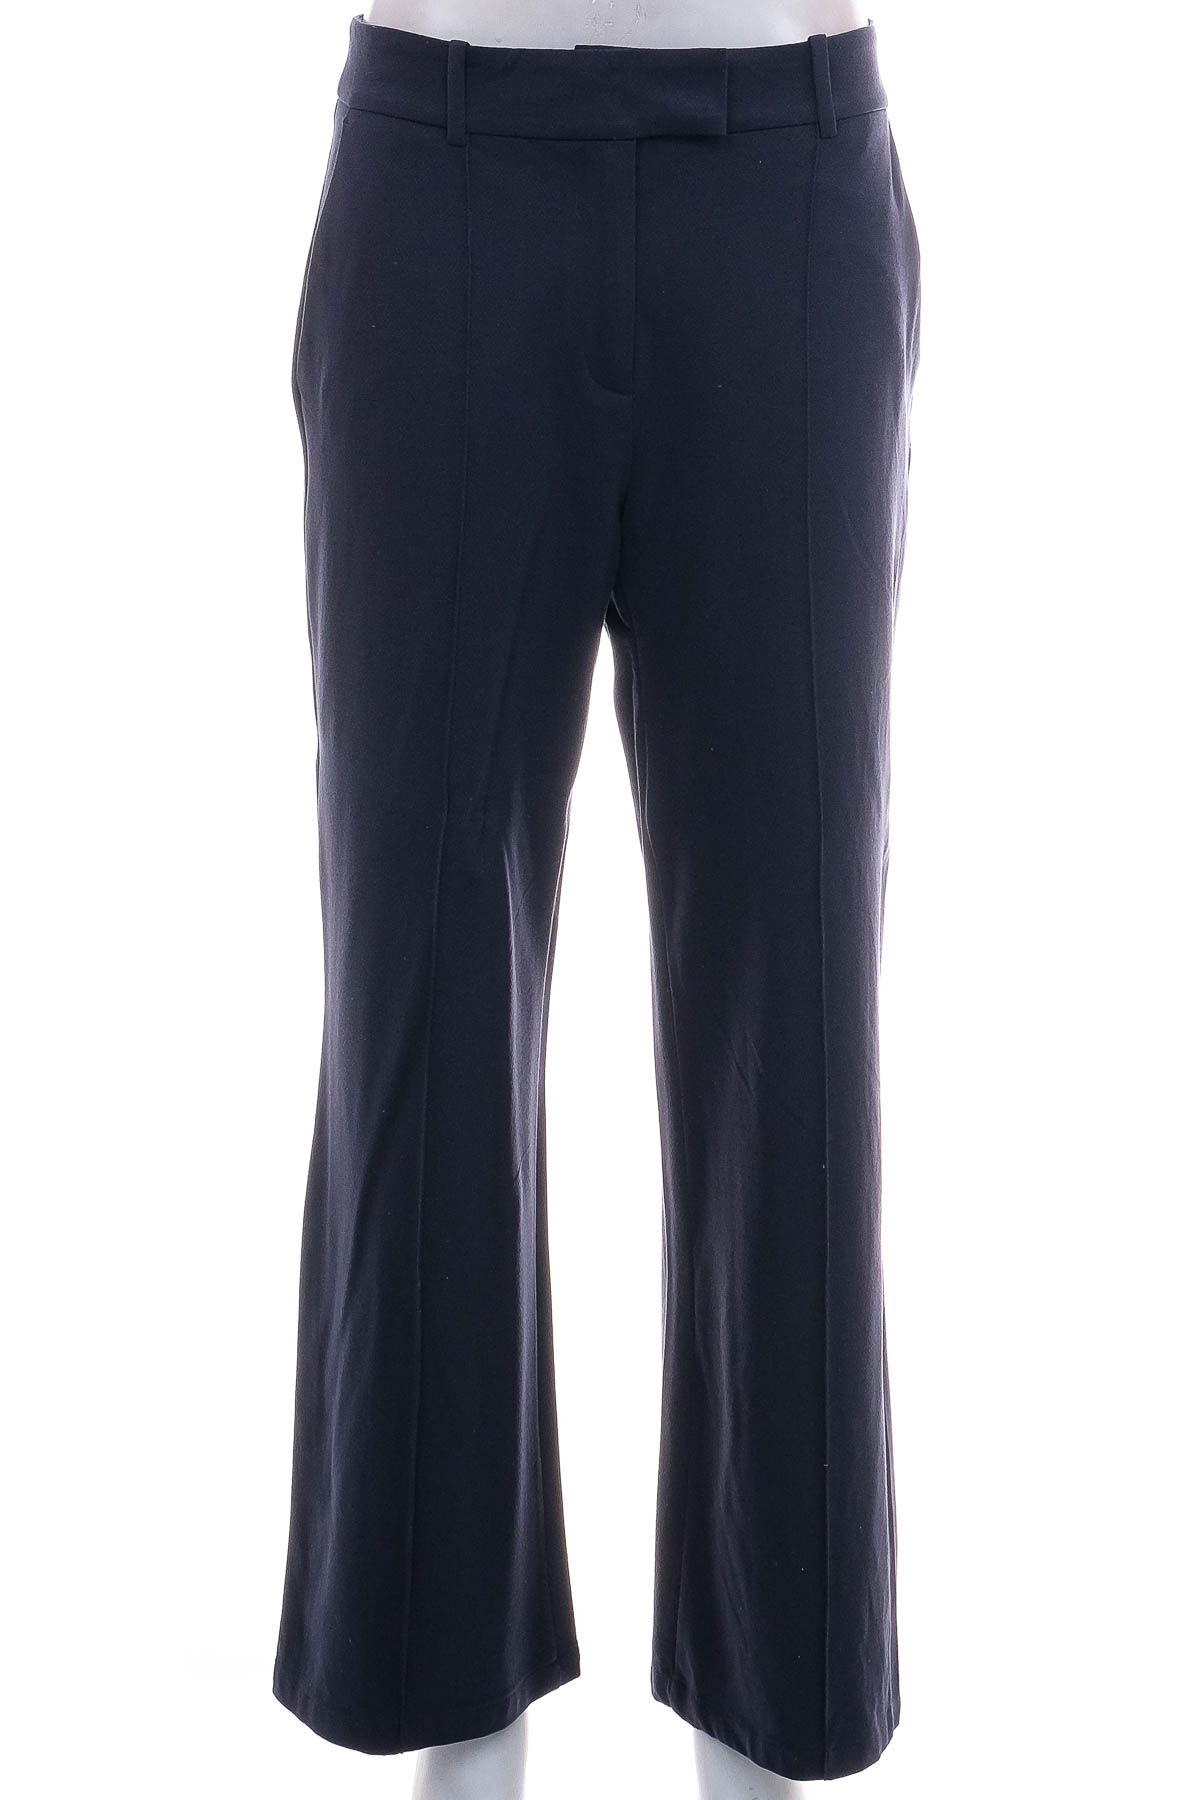 Women's trousers - ESPRIT - 0